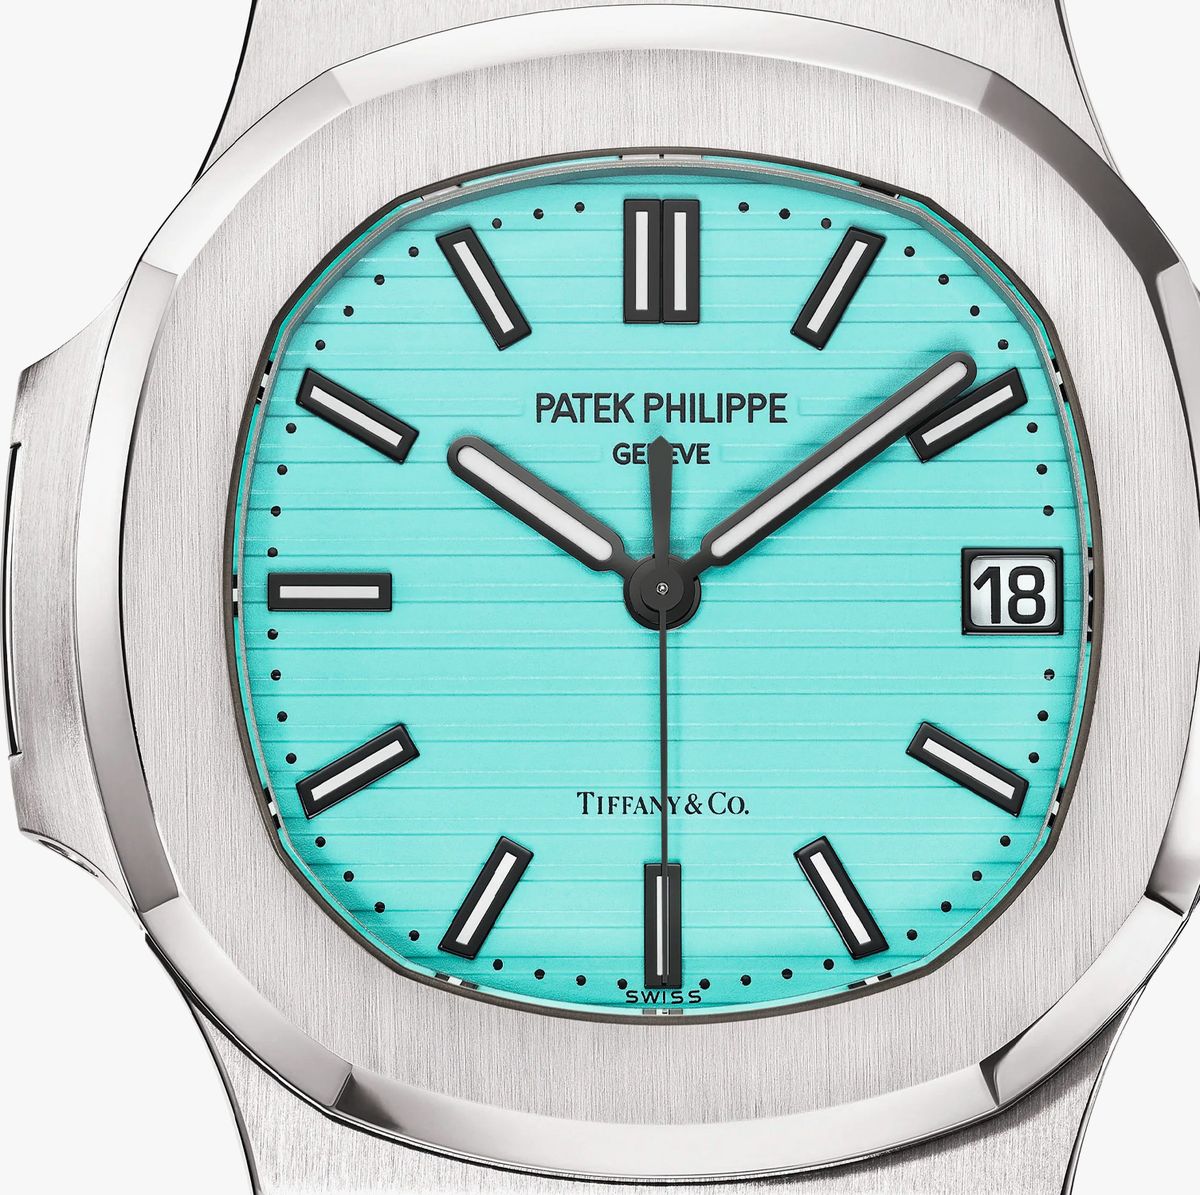 Patek Philippe & Tiffany Watches